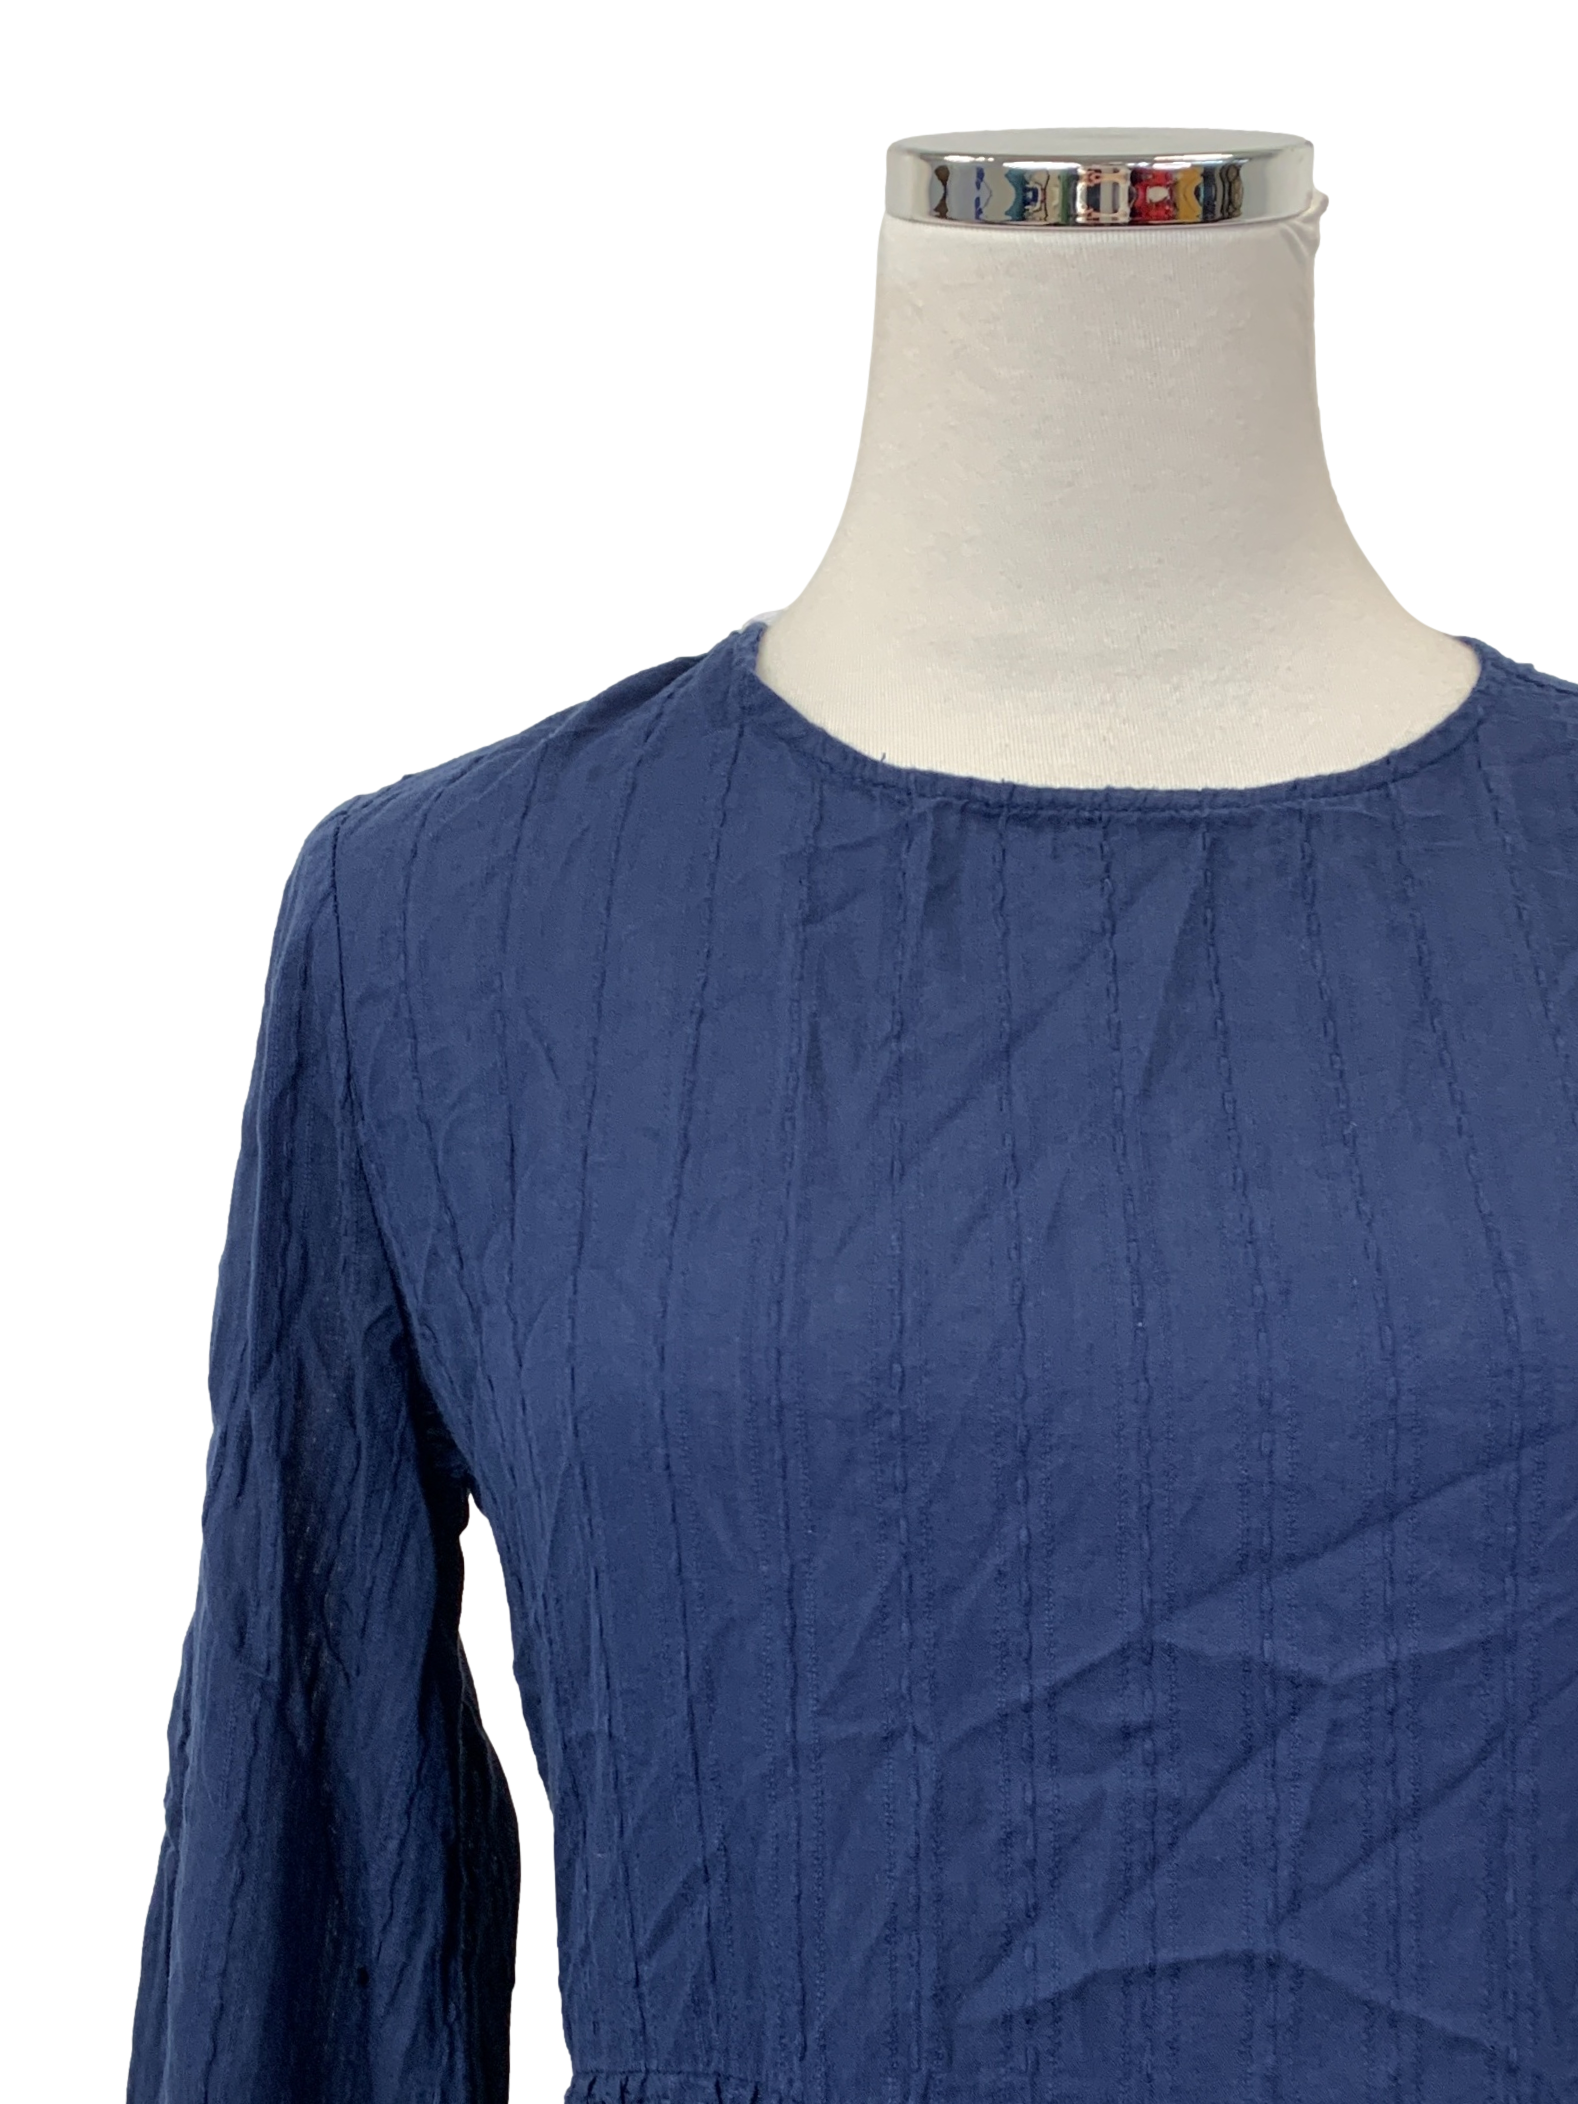 Navy Blue Textured Long Sleeves Empire Dress